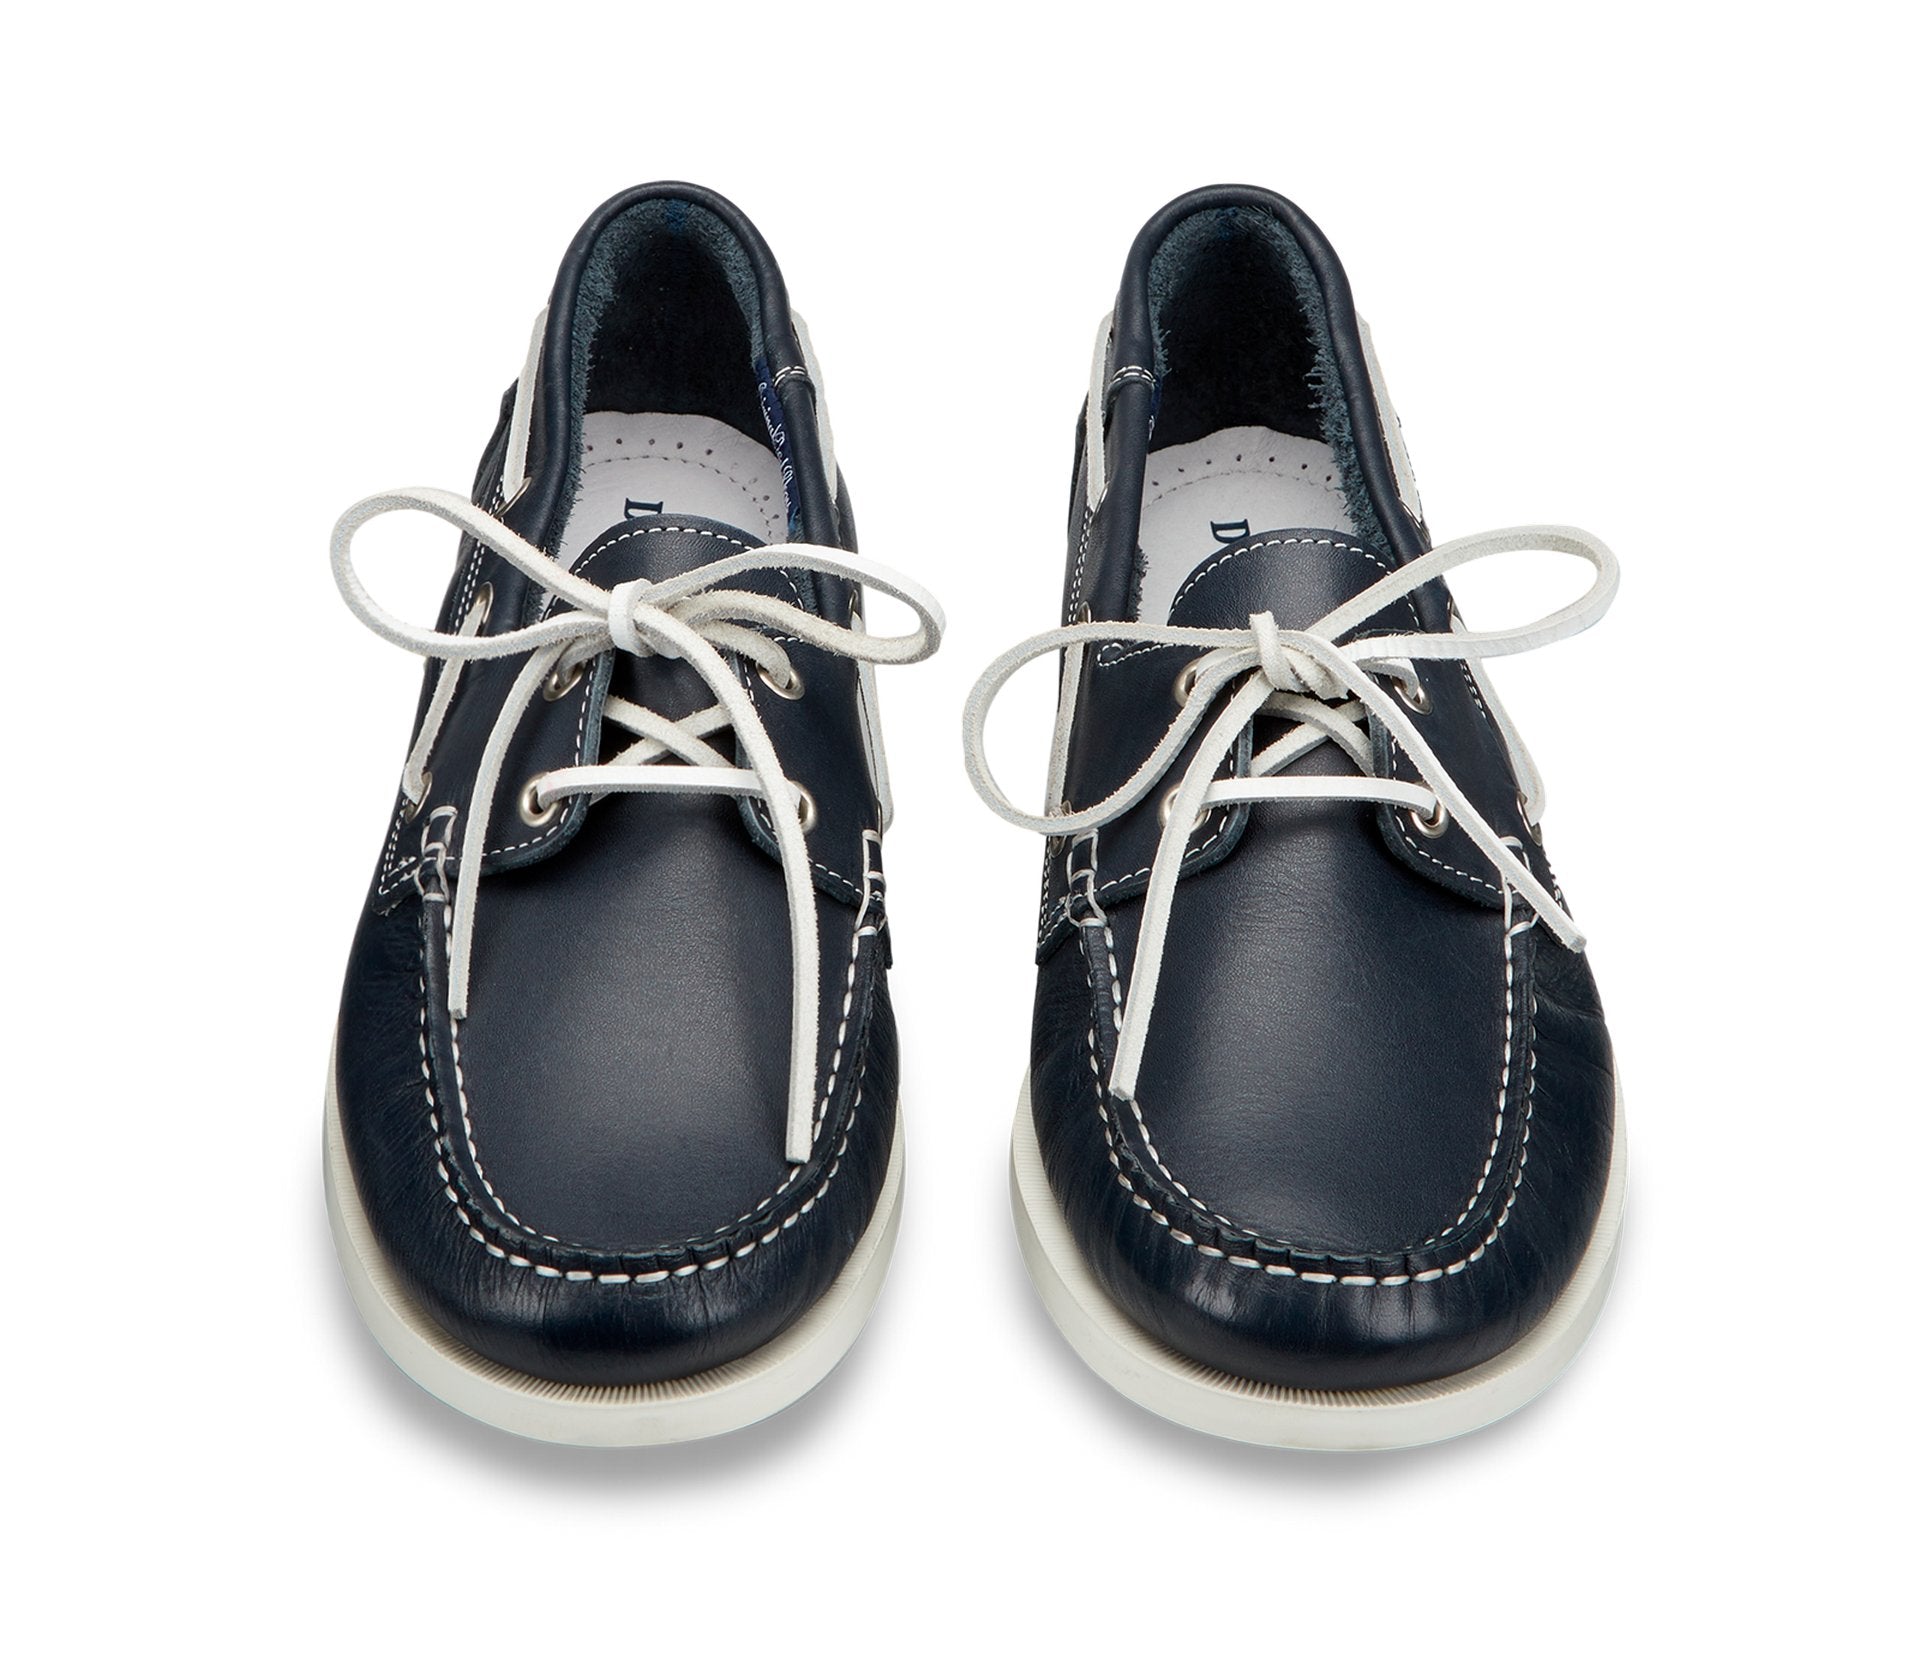 Blue Leather Men's Boat Shoes